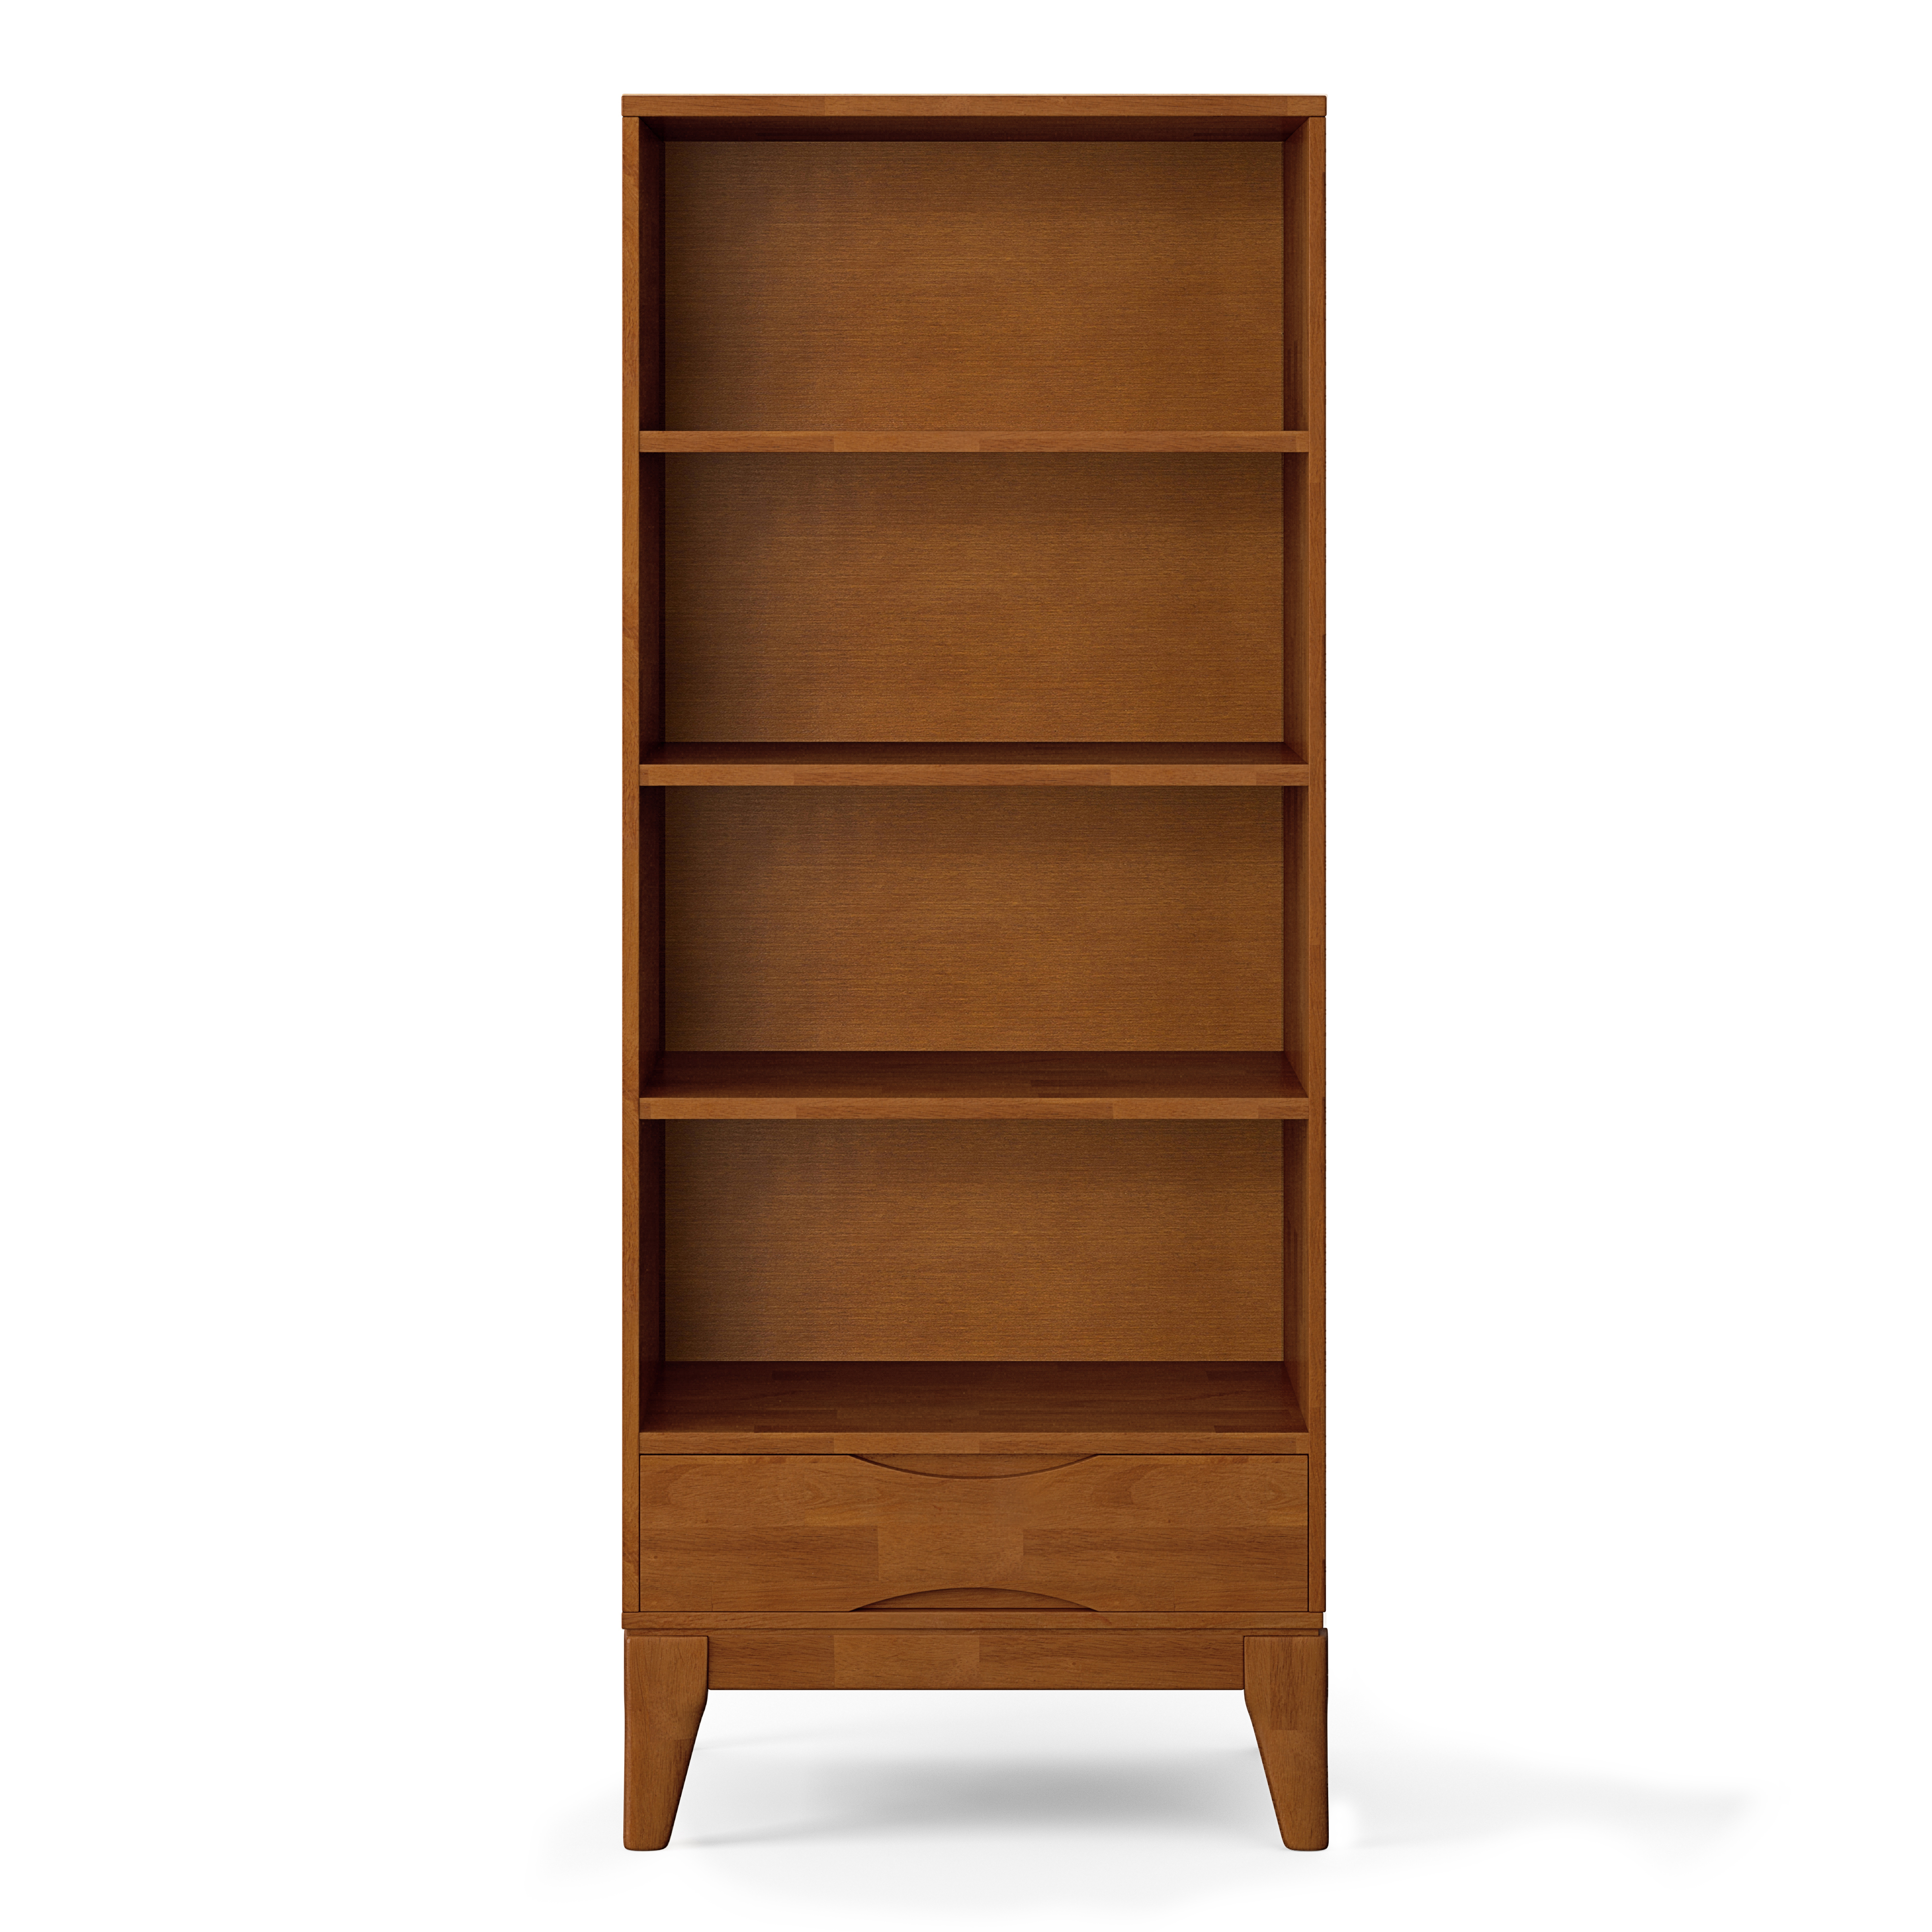 Simpli Home Harper SOLID HARDWOOD Bookcase with Storage in Teak Brown